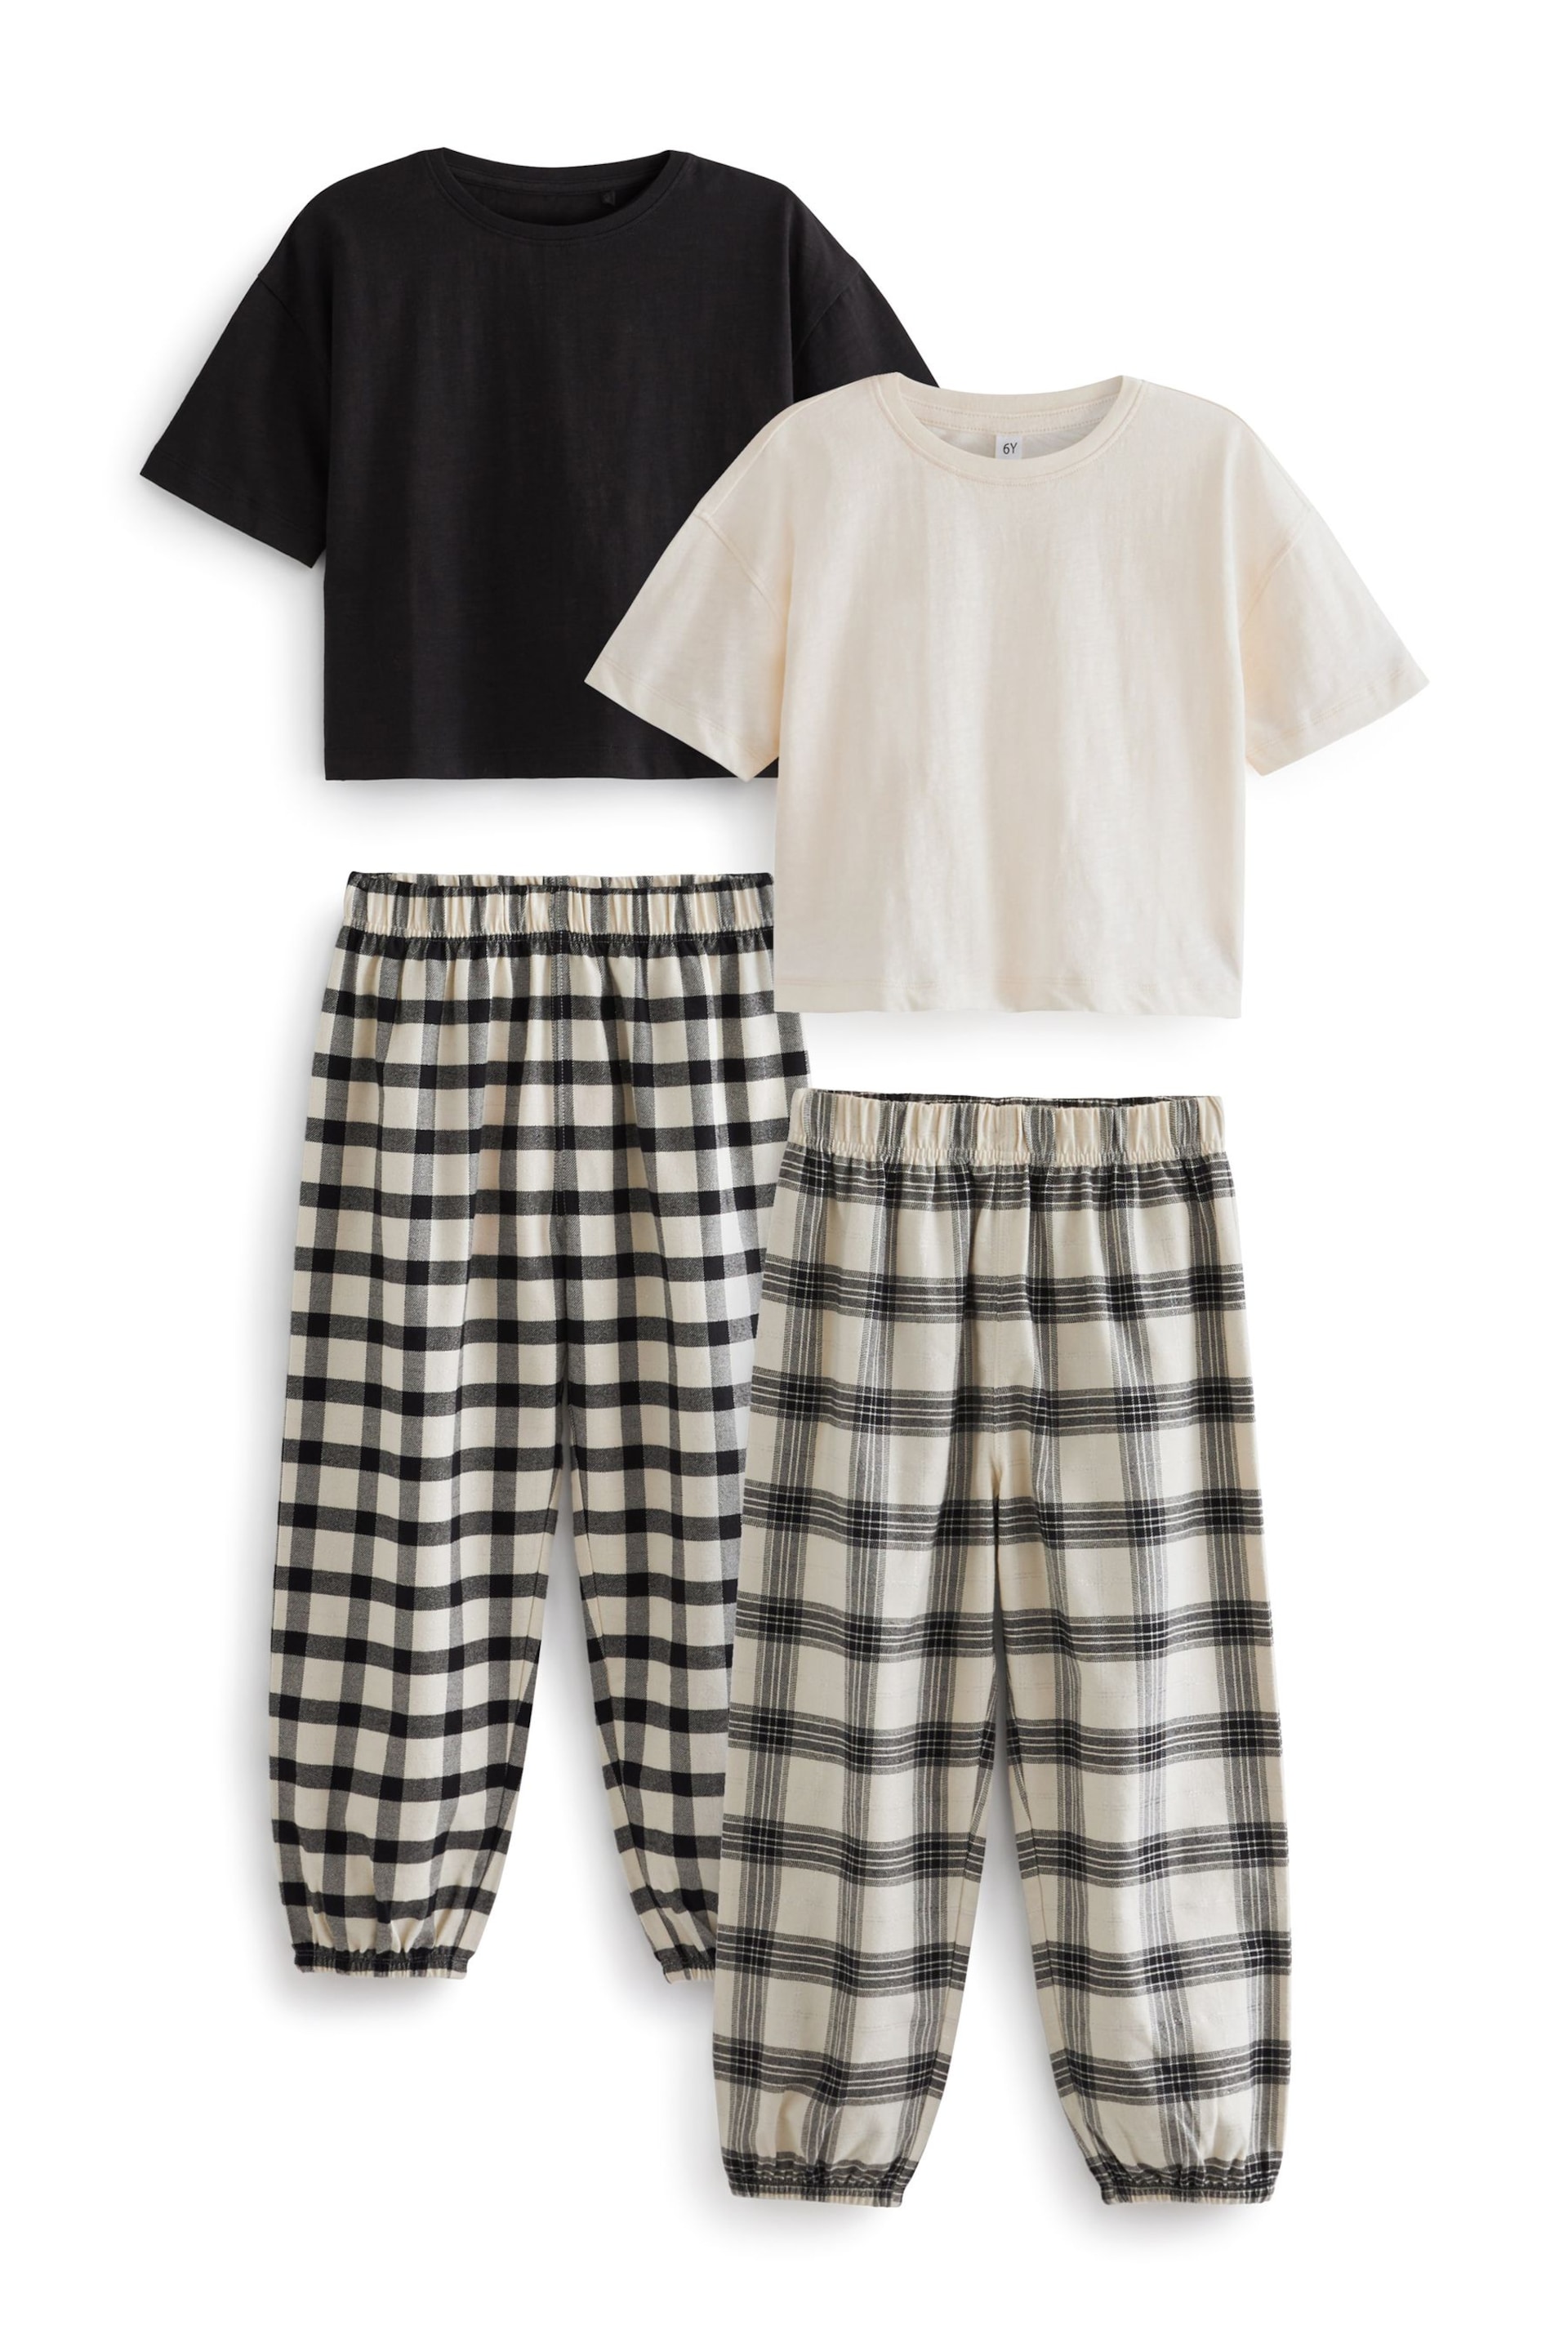 Black/White Cotton Woven Check Pyjamas 2 Pack (3-16yrs) - Image 1 of 5